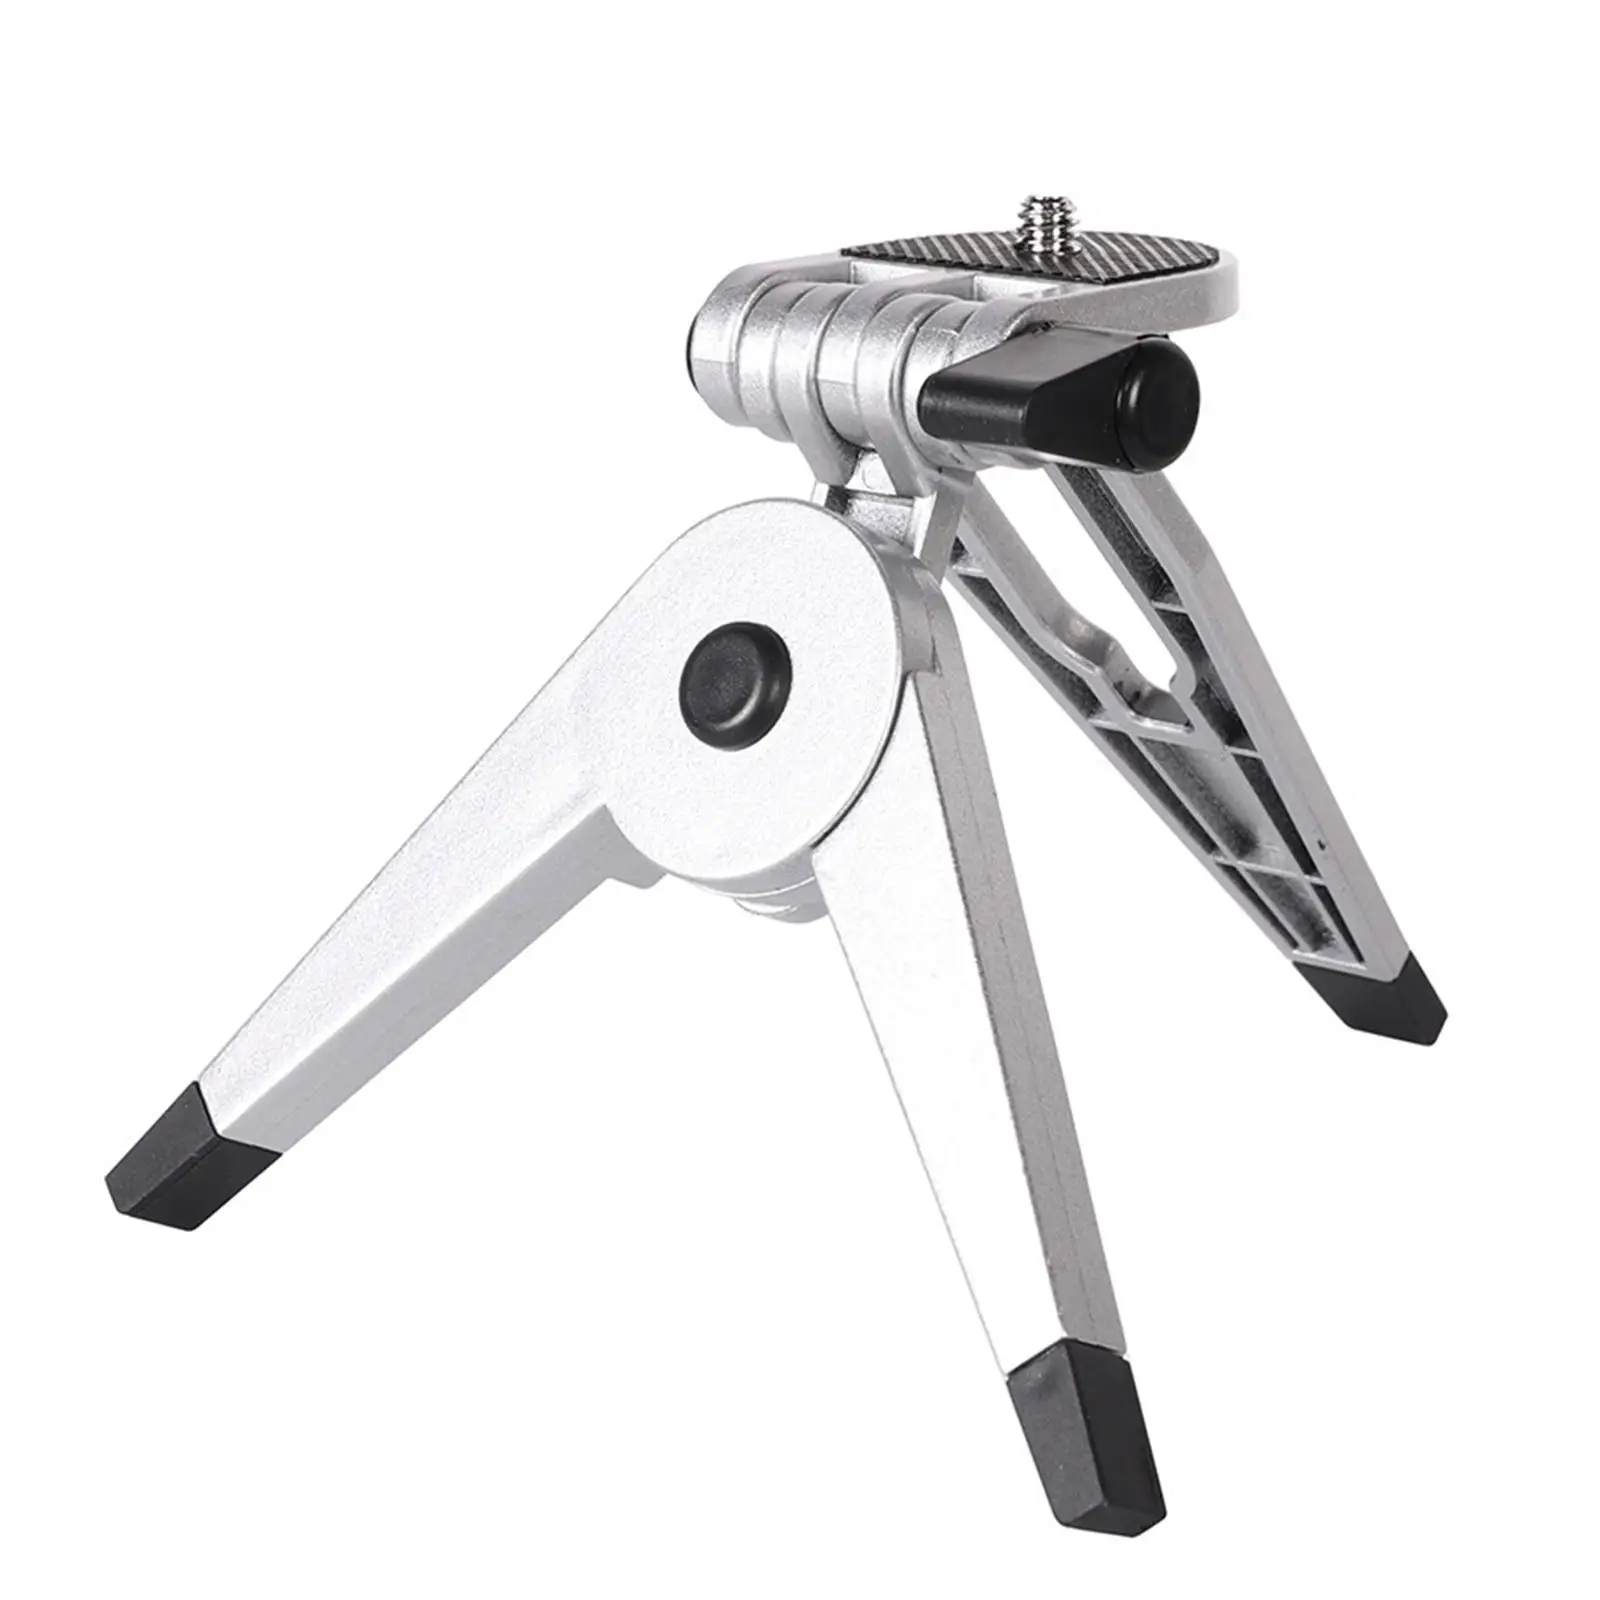 

Mini Foldable Desk Tripod Stand For Camera Mount Angle Legs For Nikon Cameras DV Camcorders